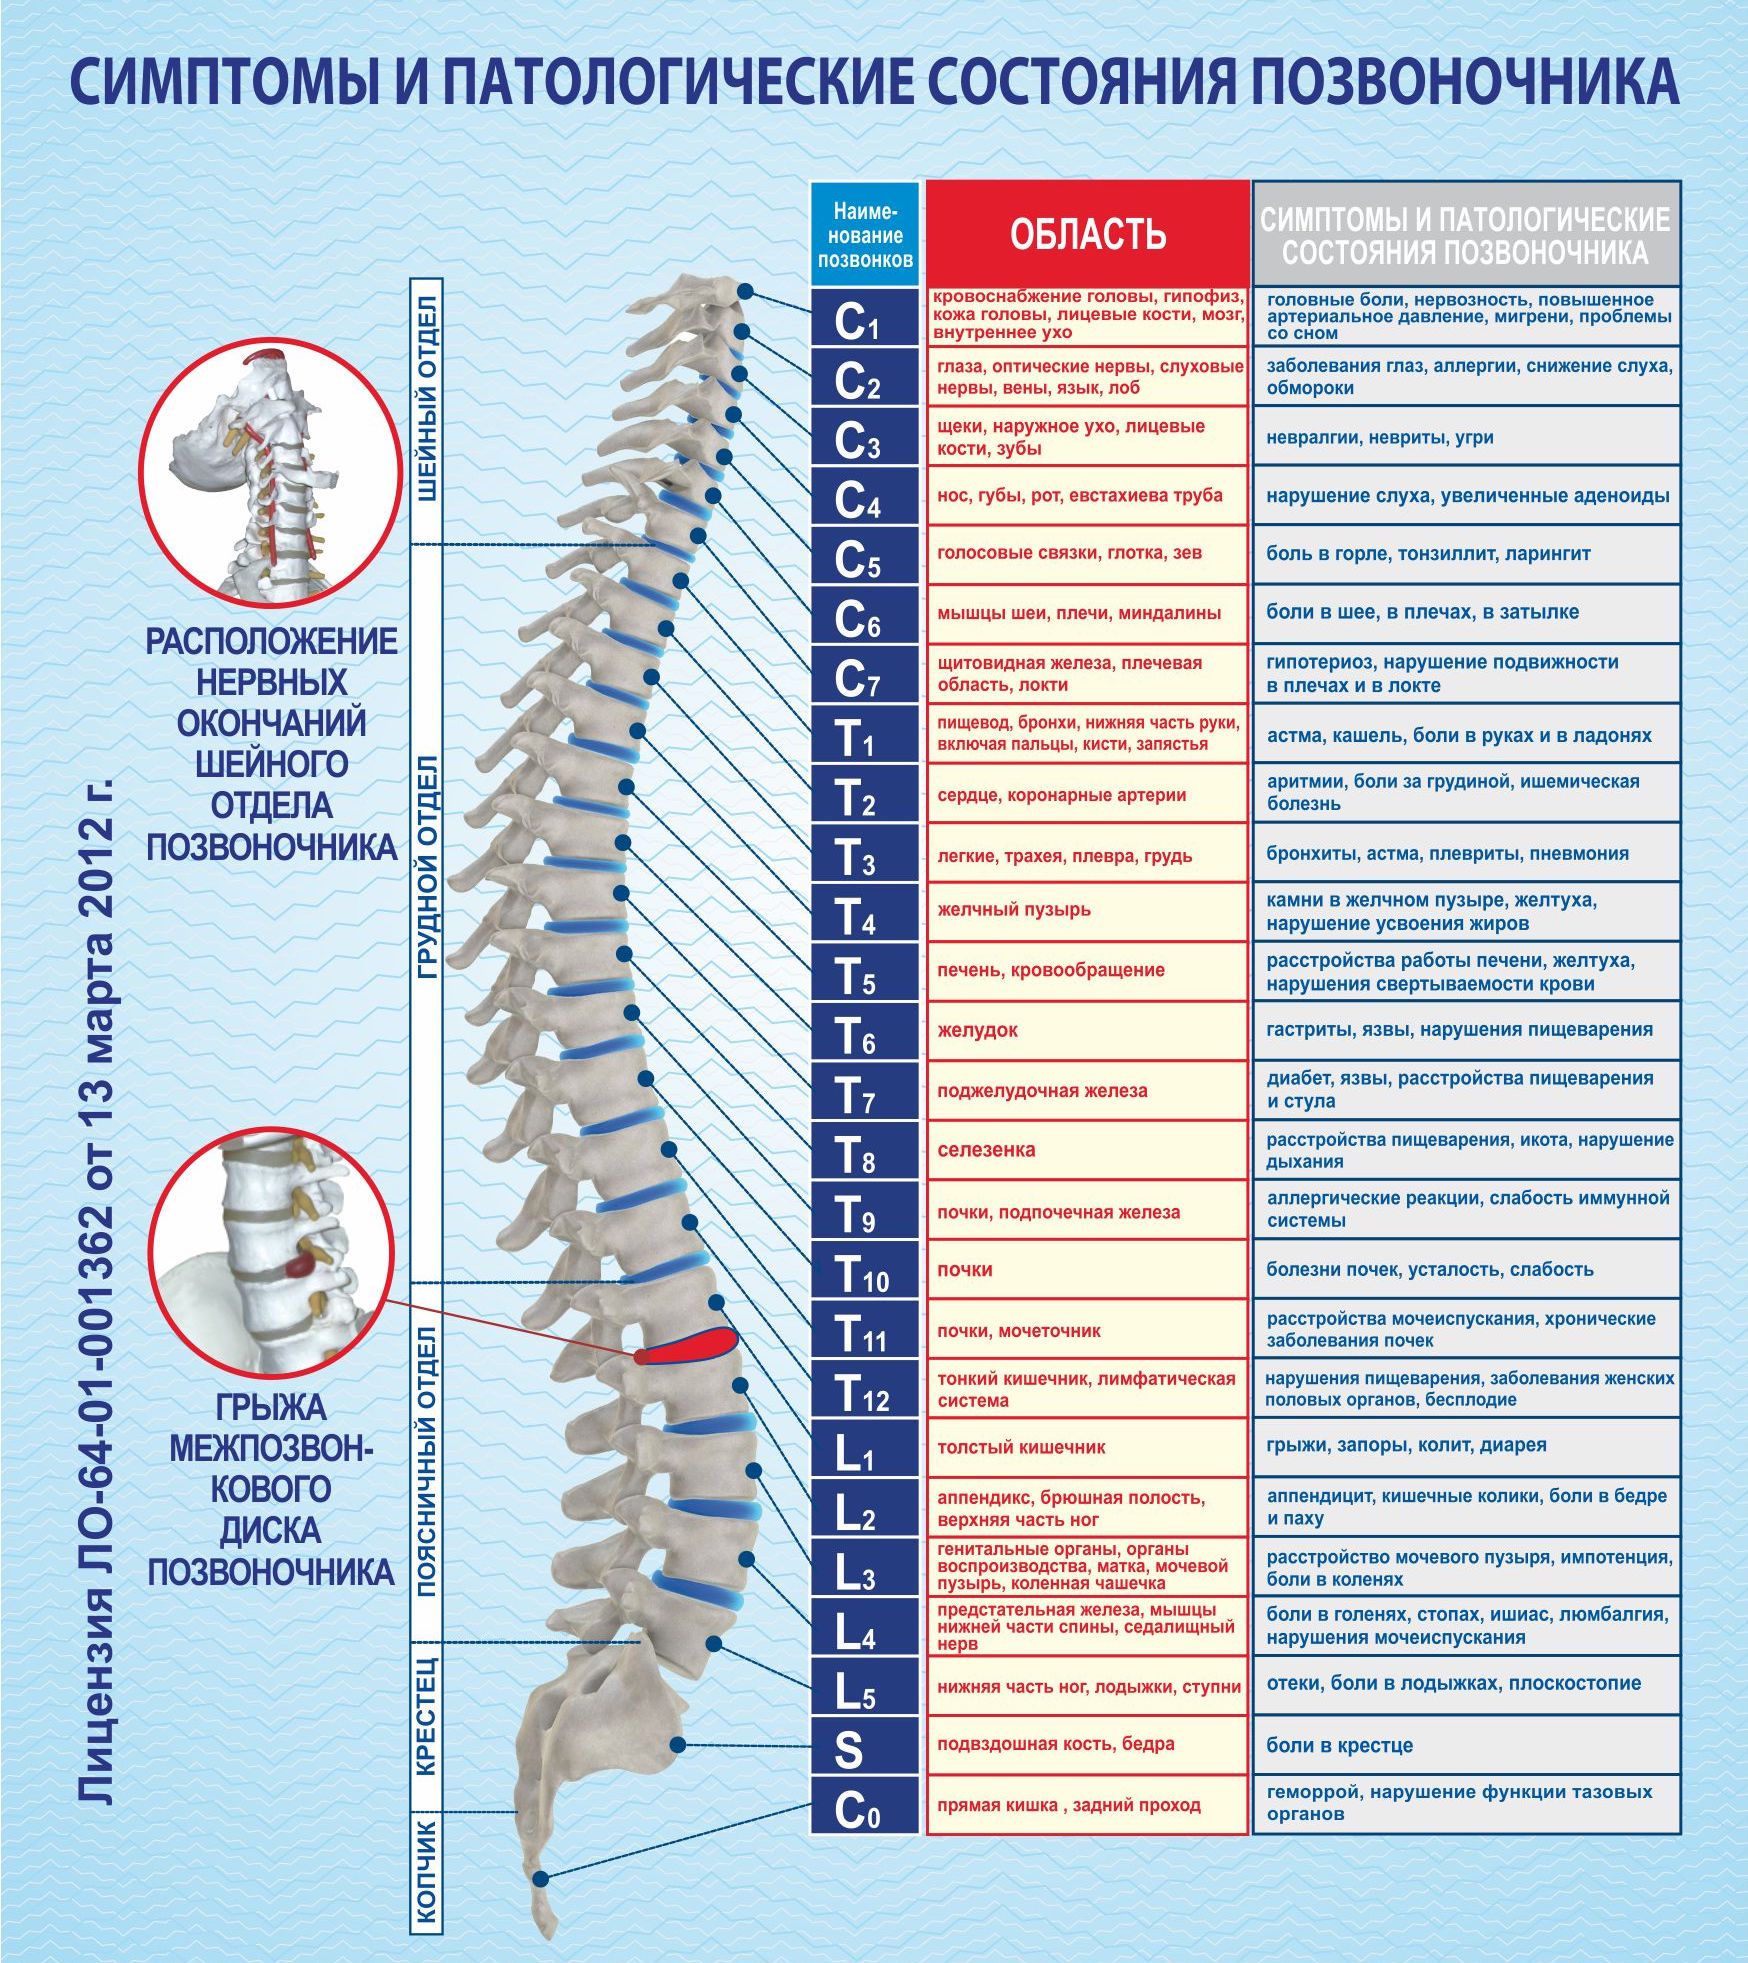 Грудной отдел позвоночника (12 позвонков) (vertebrae Thoracales)